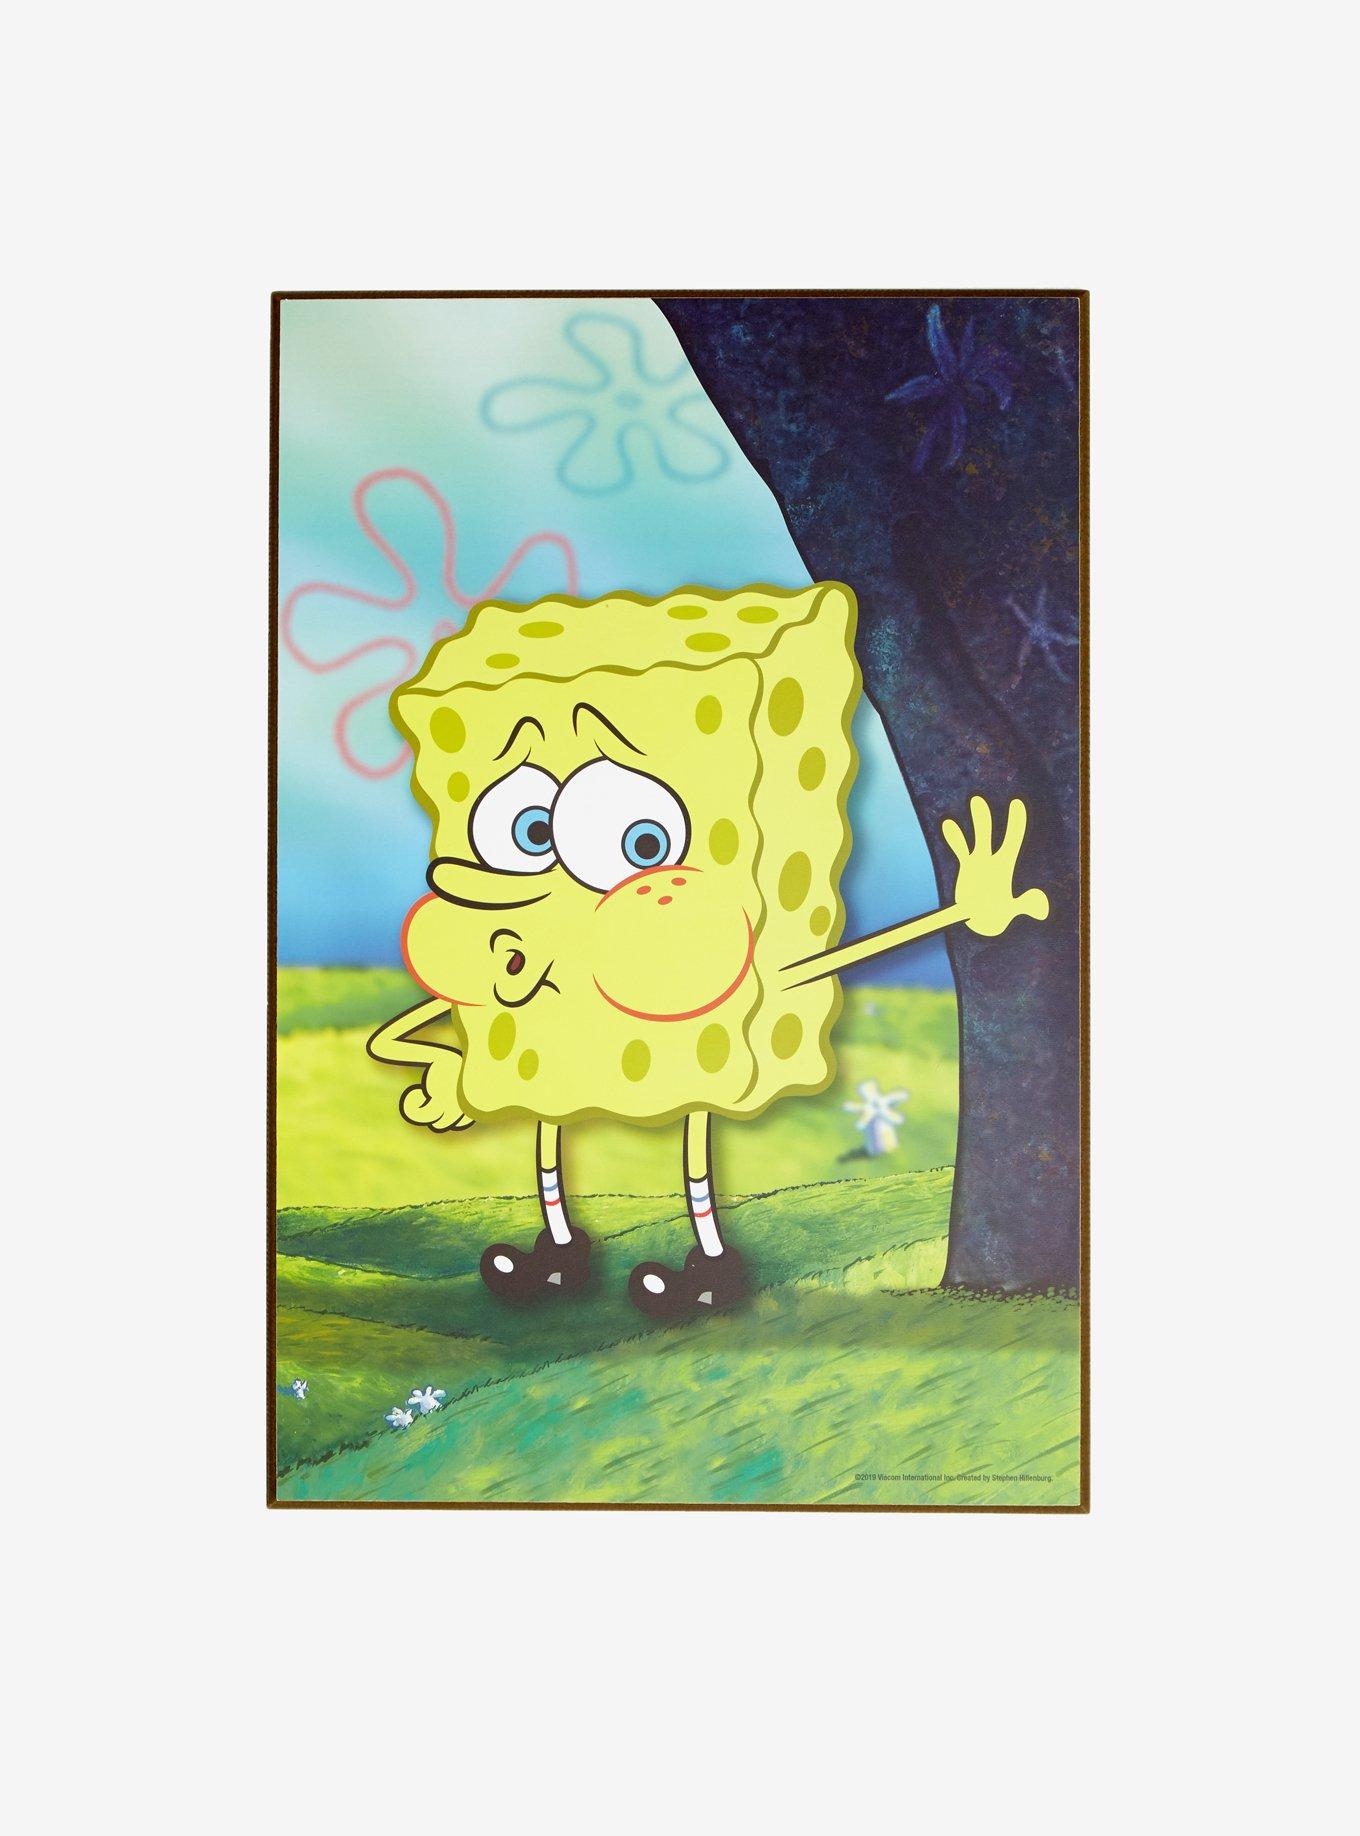 Spongebob squarepants nudes